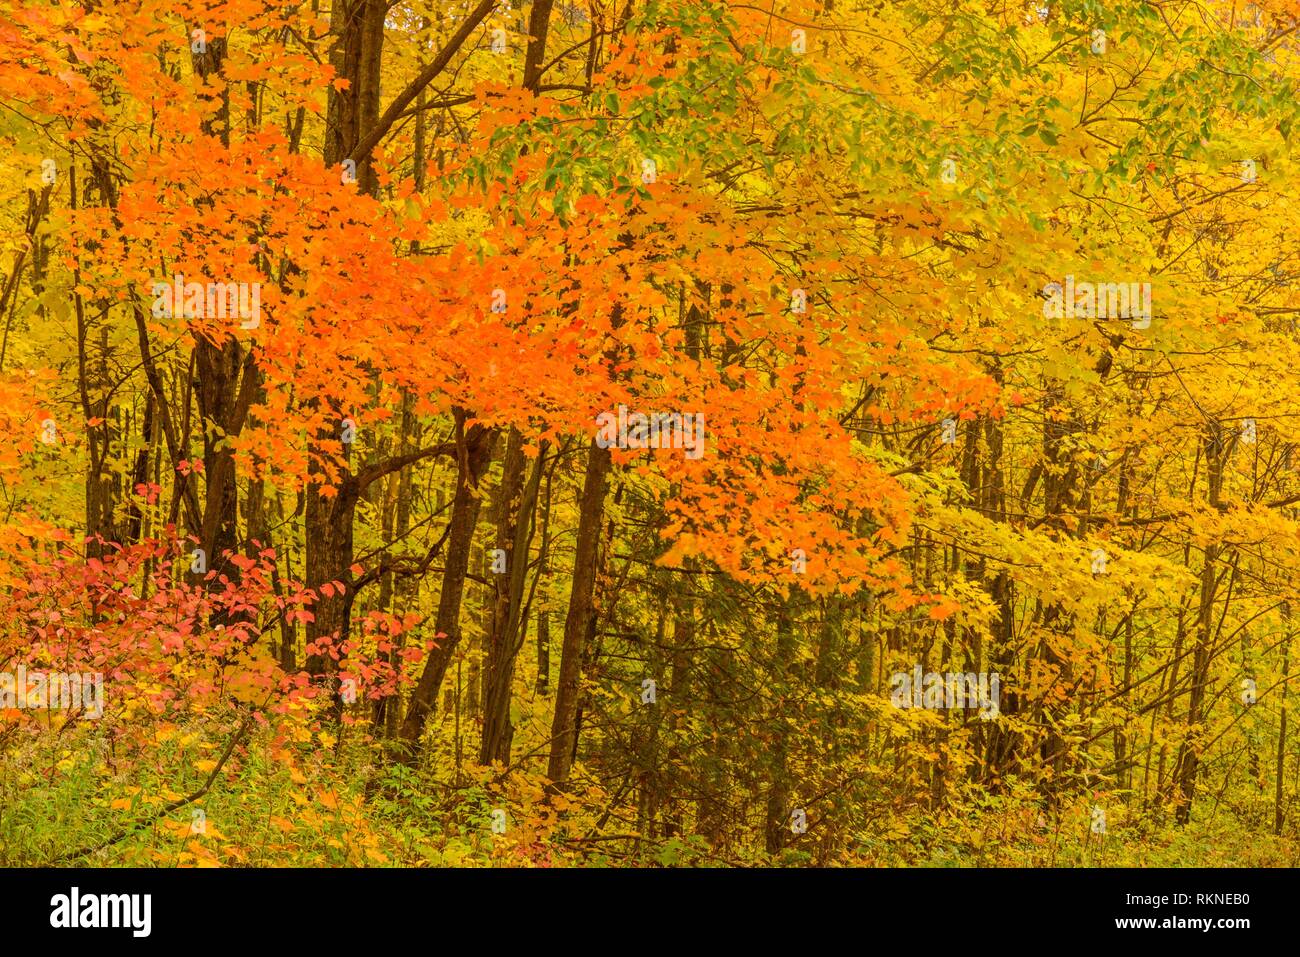 Autumn foliage in a hardwood forest, Sheguiandah, Manitoulin Island, Ontario, Canada. Stock Photo